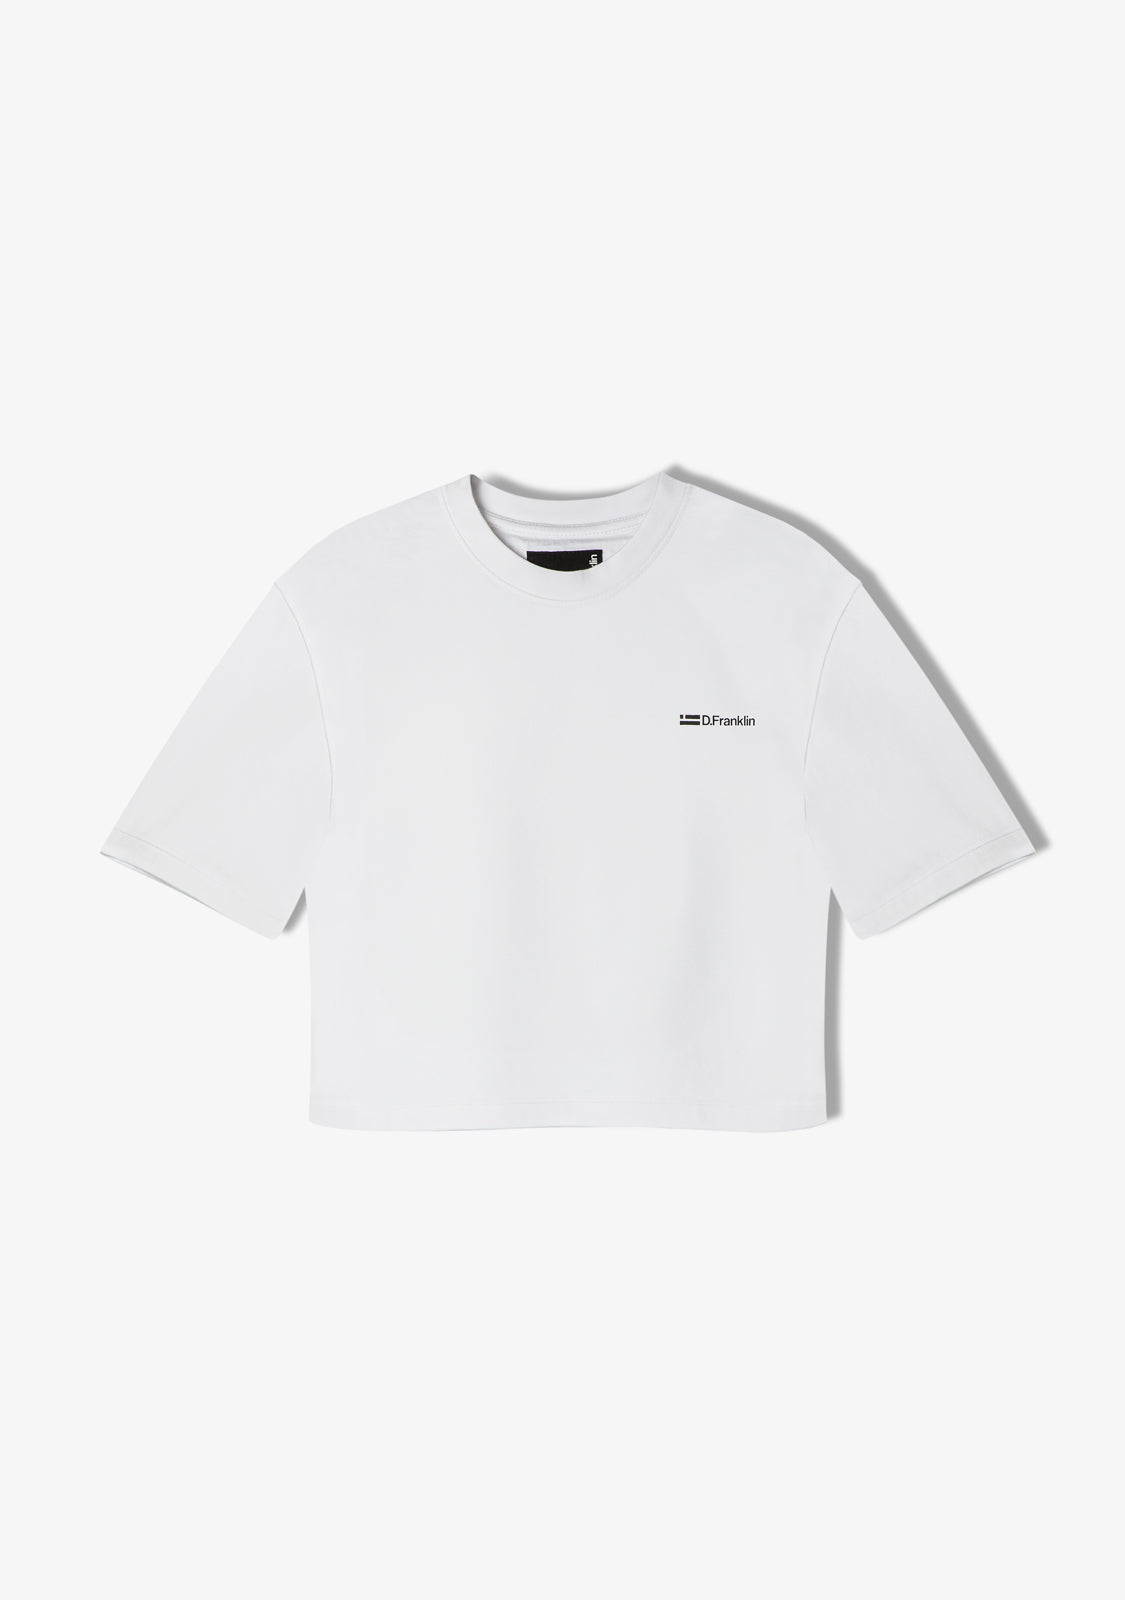 St. Denis Cropped T-Shirt White / Black